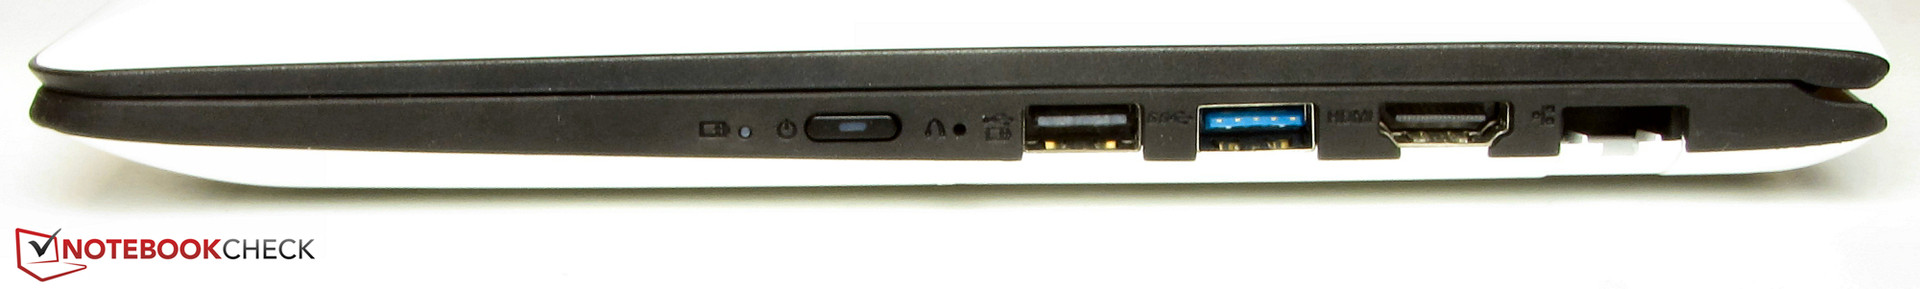 Lenovo IdeaPad 300S-11IBR Netbook Review - NotebookCheck.net Reviews